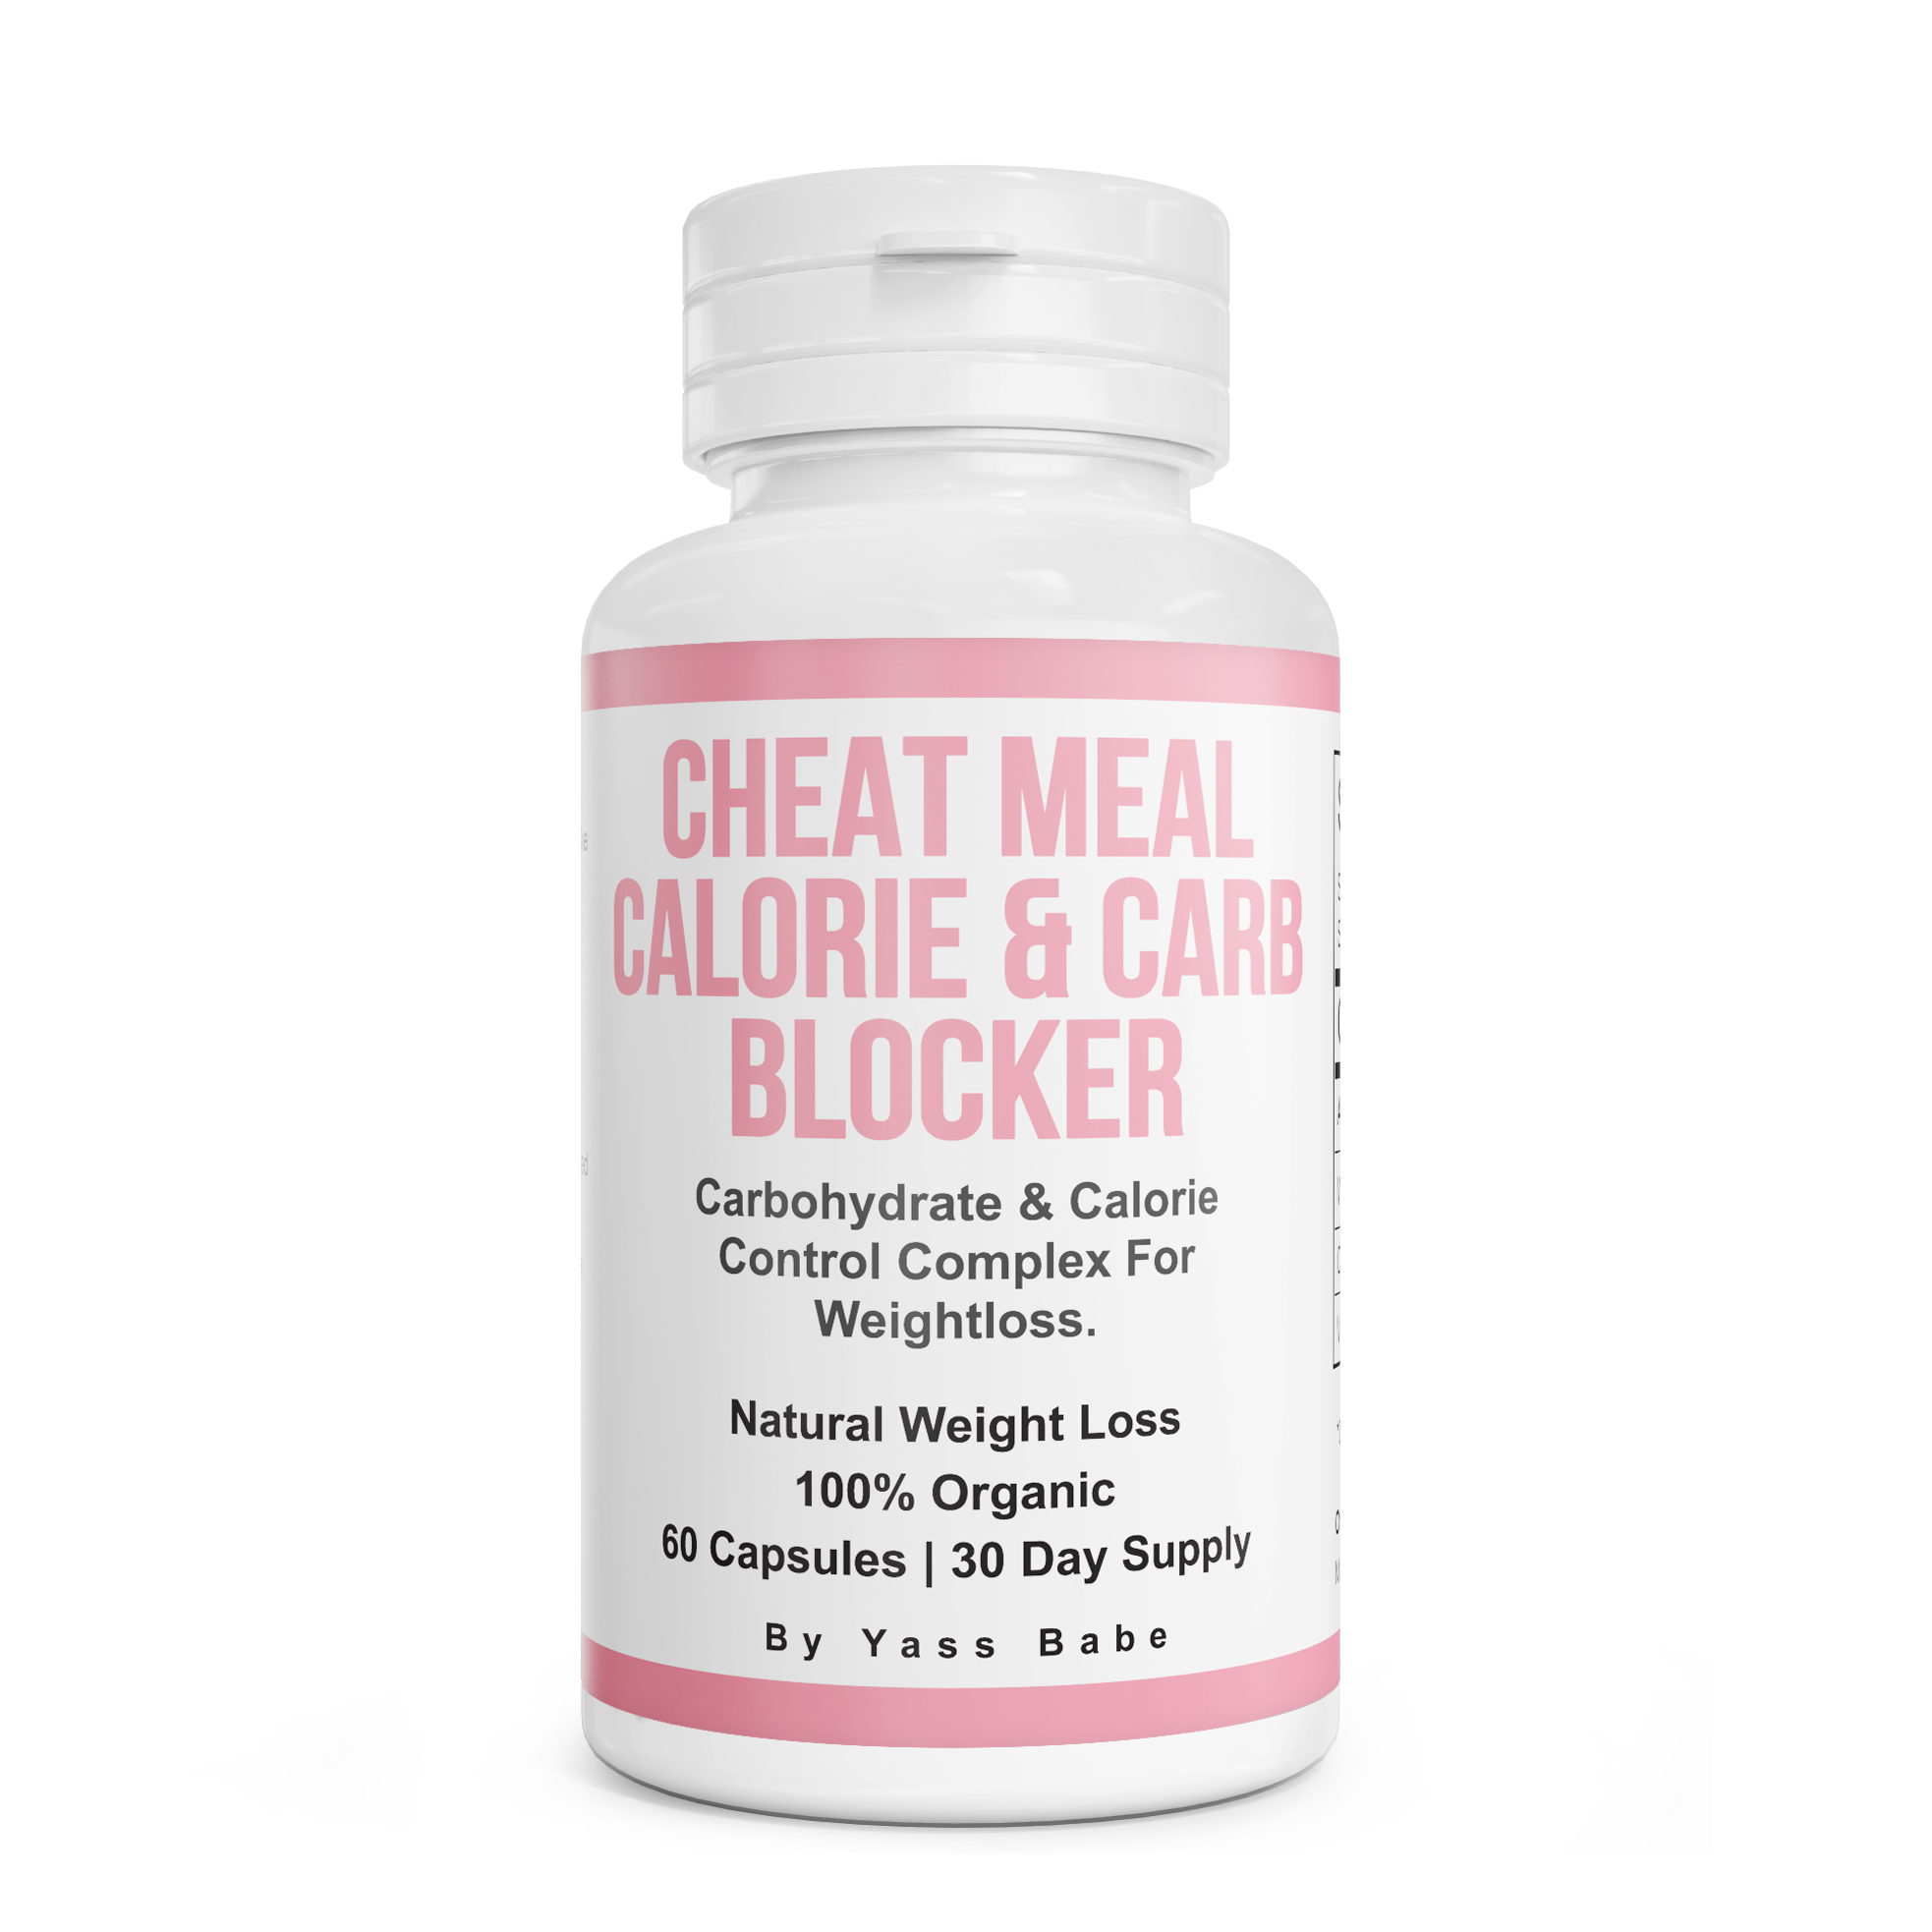 Cheat Meal Calorie & Carb Blocker